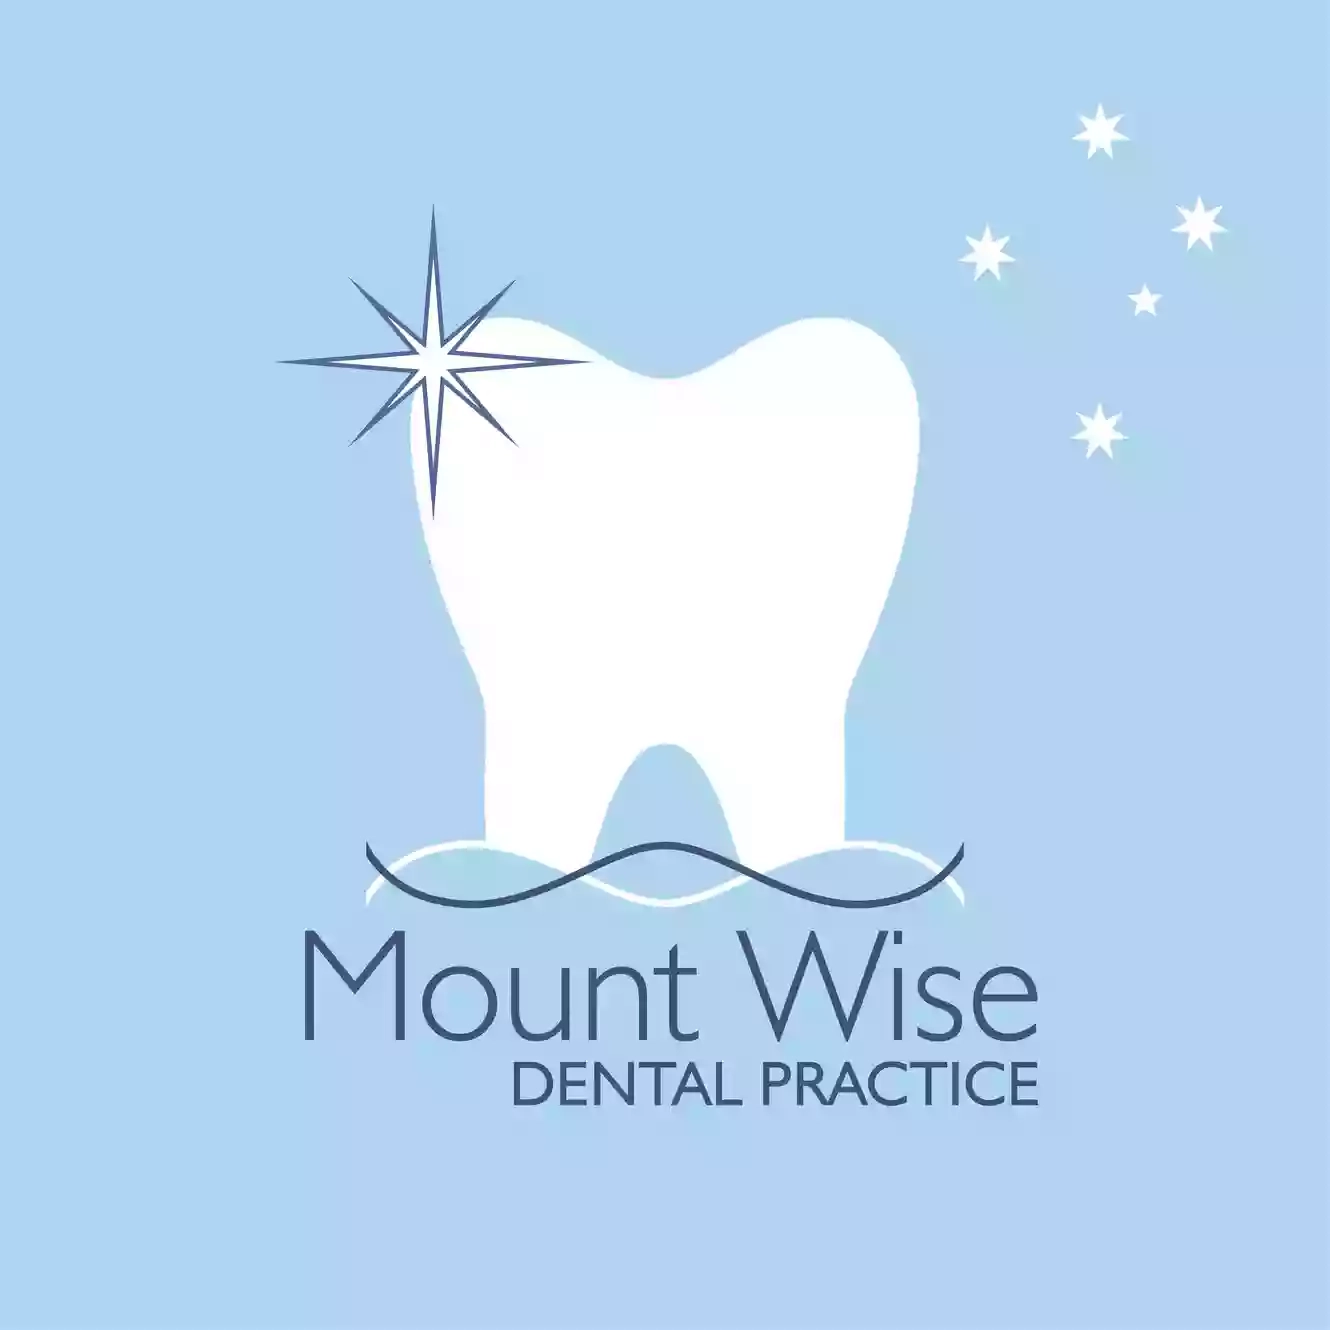 Mount Wise Dental Practice